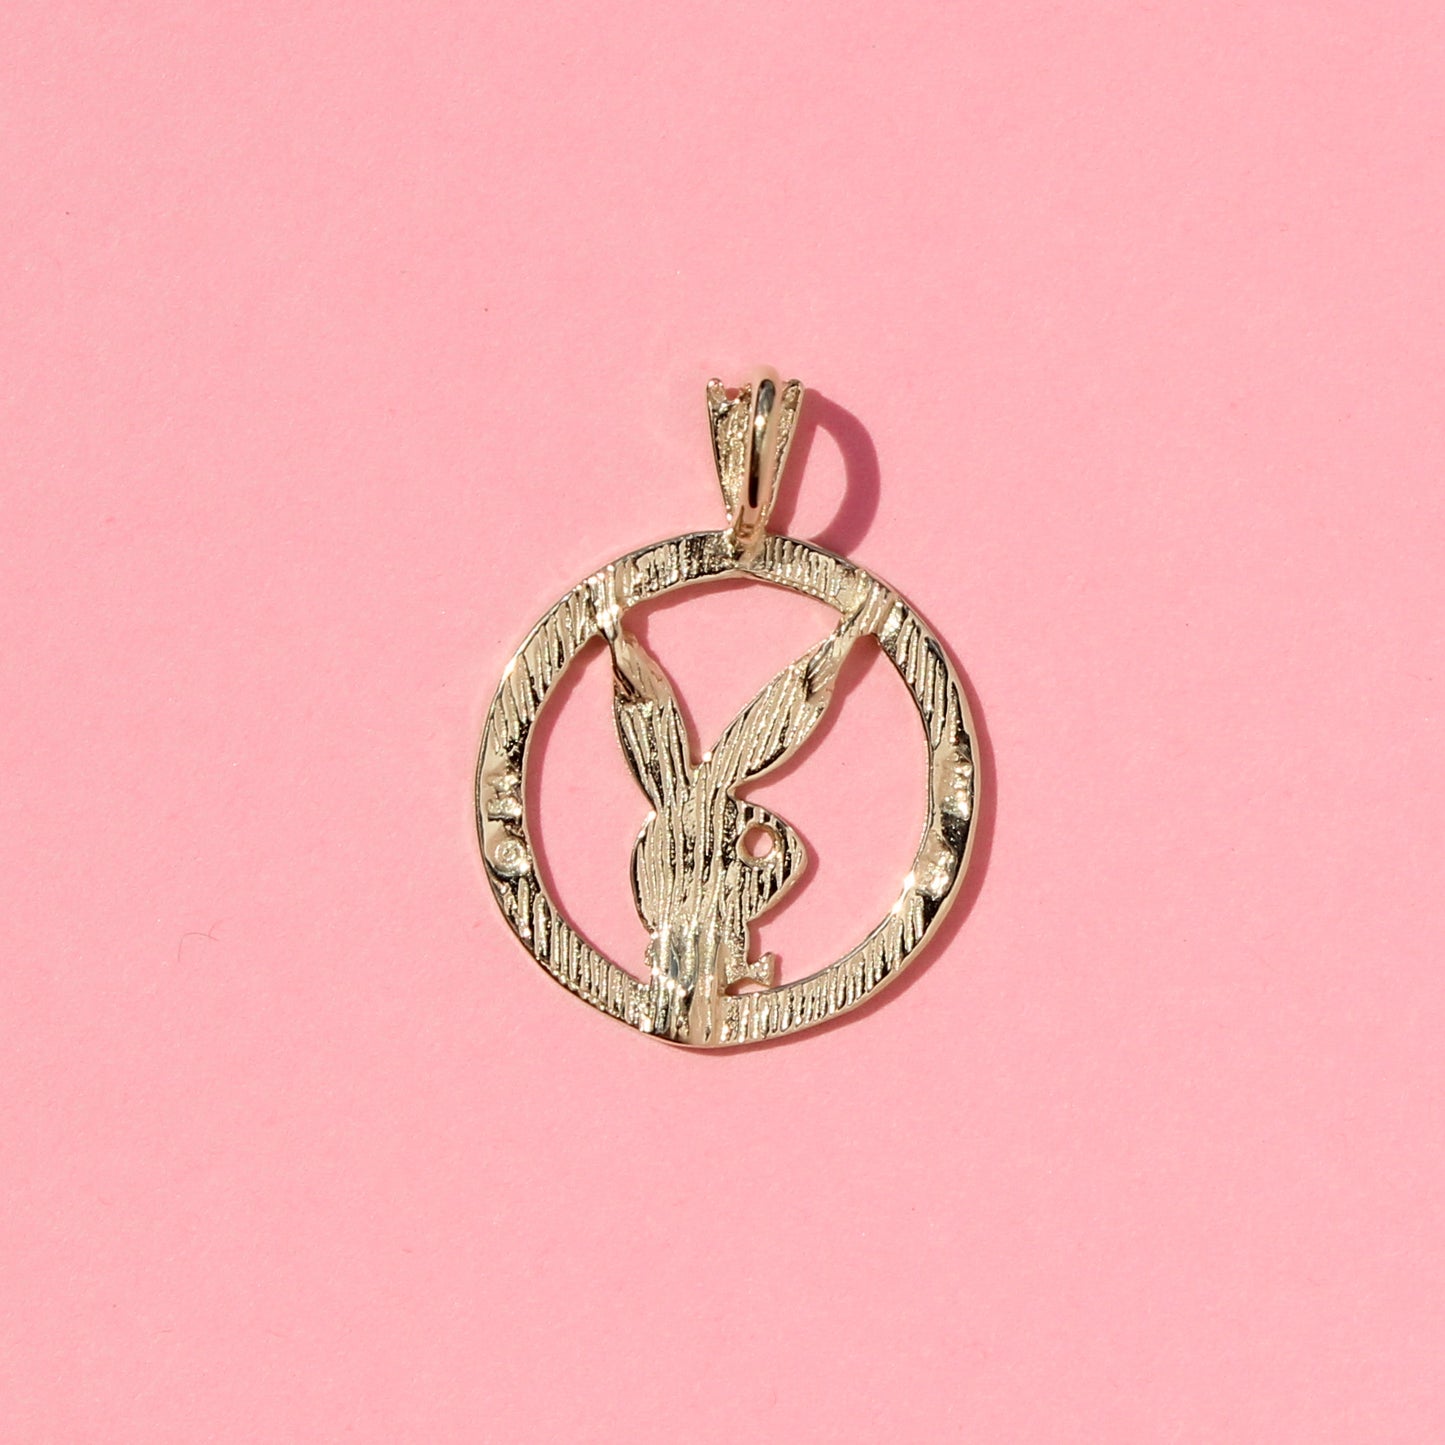 Playboy bunny VTG 14kt gold pendant